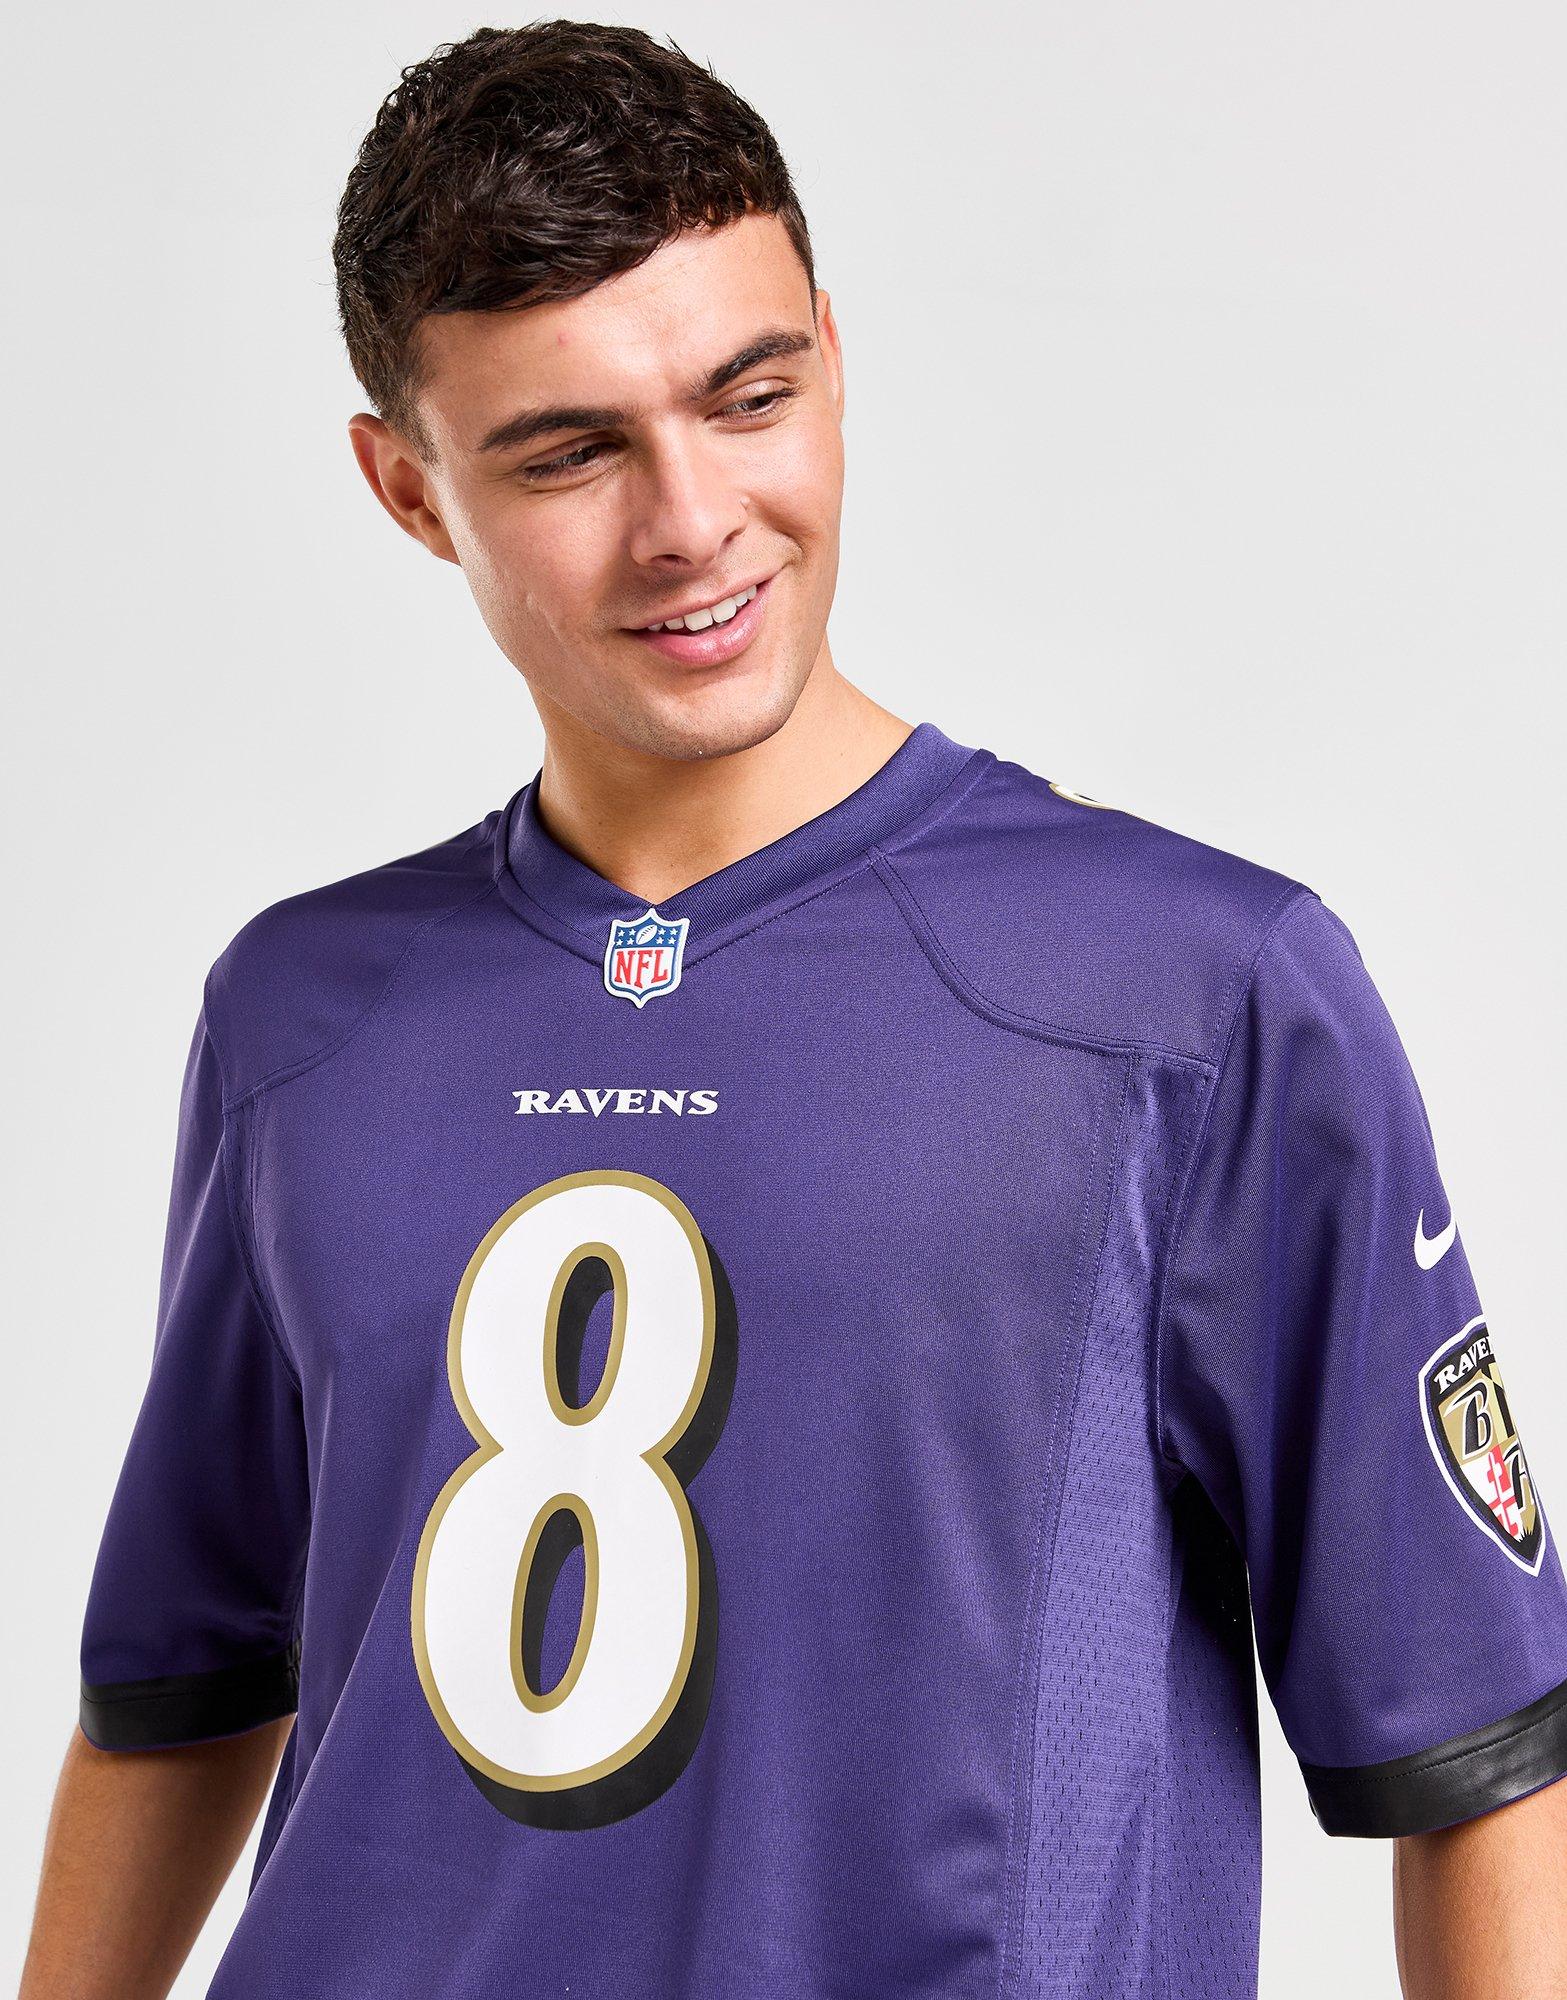 Purple Nike NFL Baltimore Ravens Jackson #8 Jersey